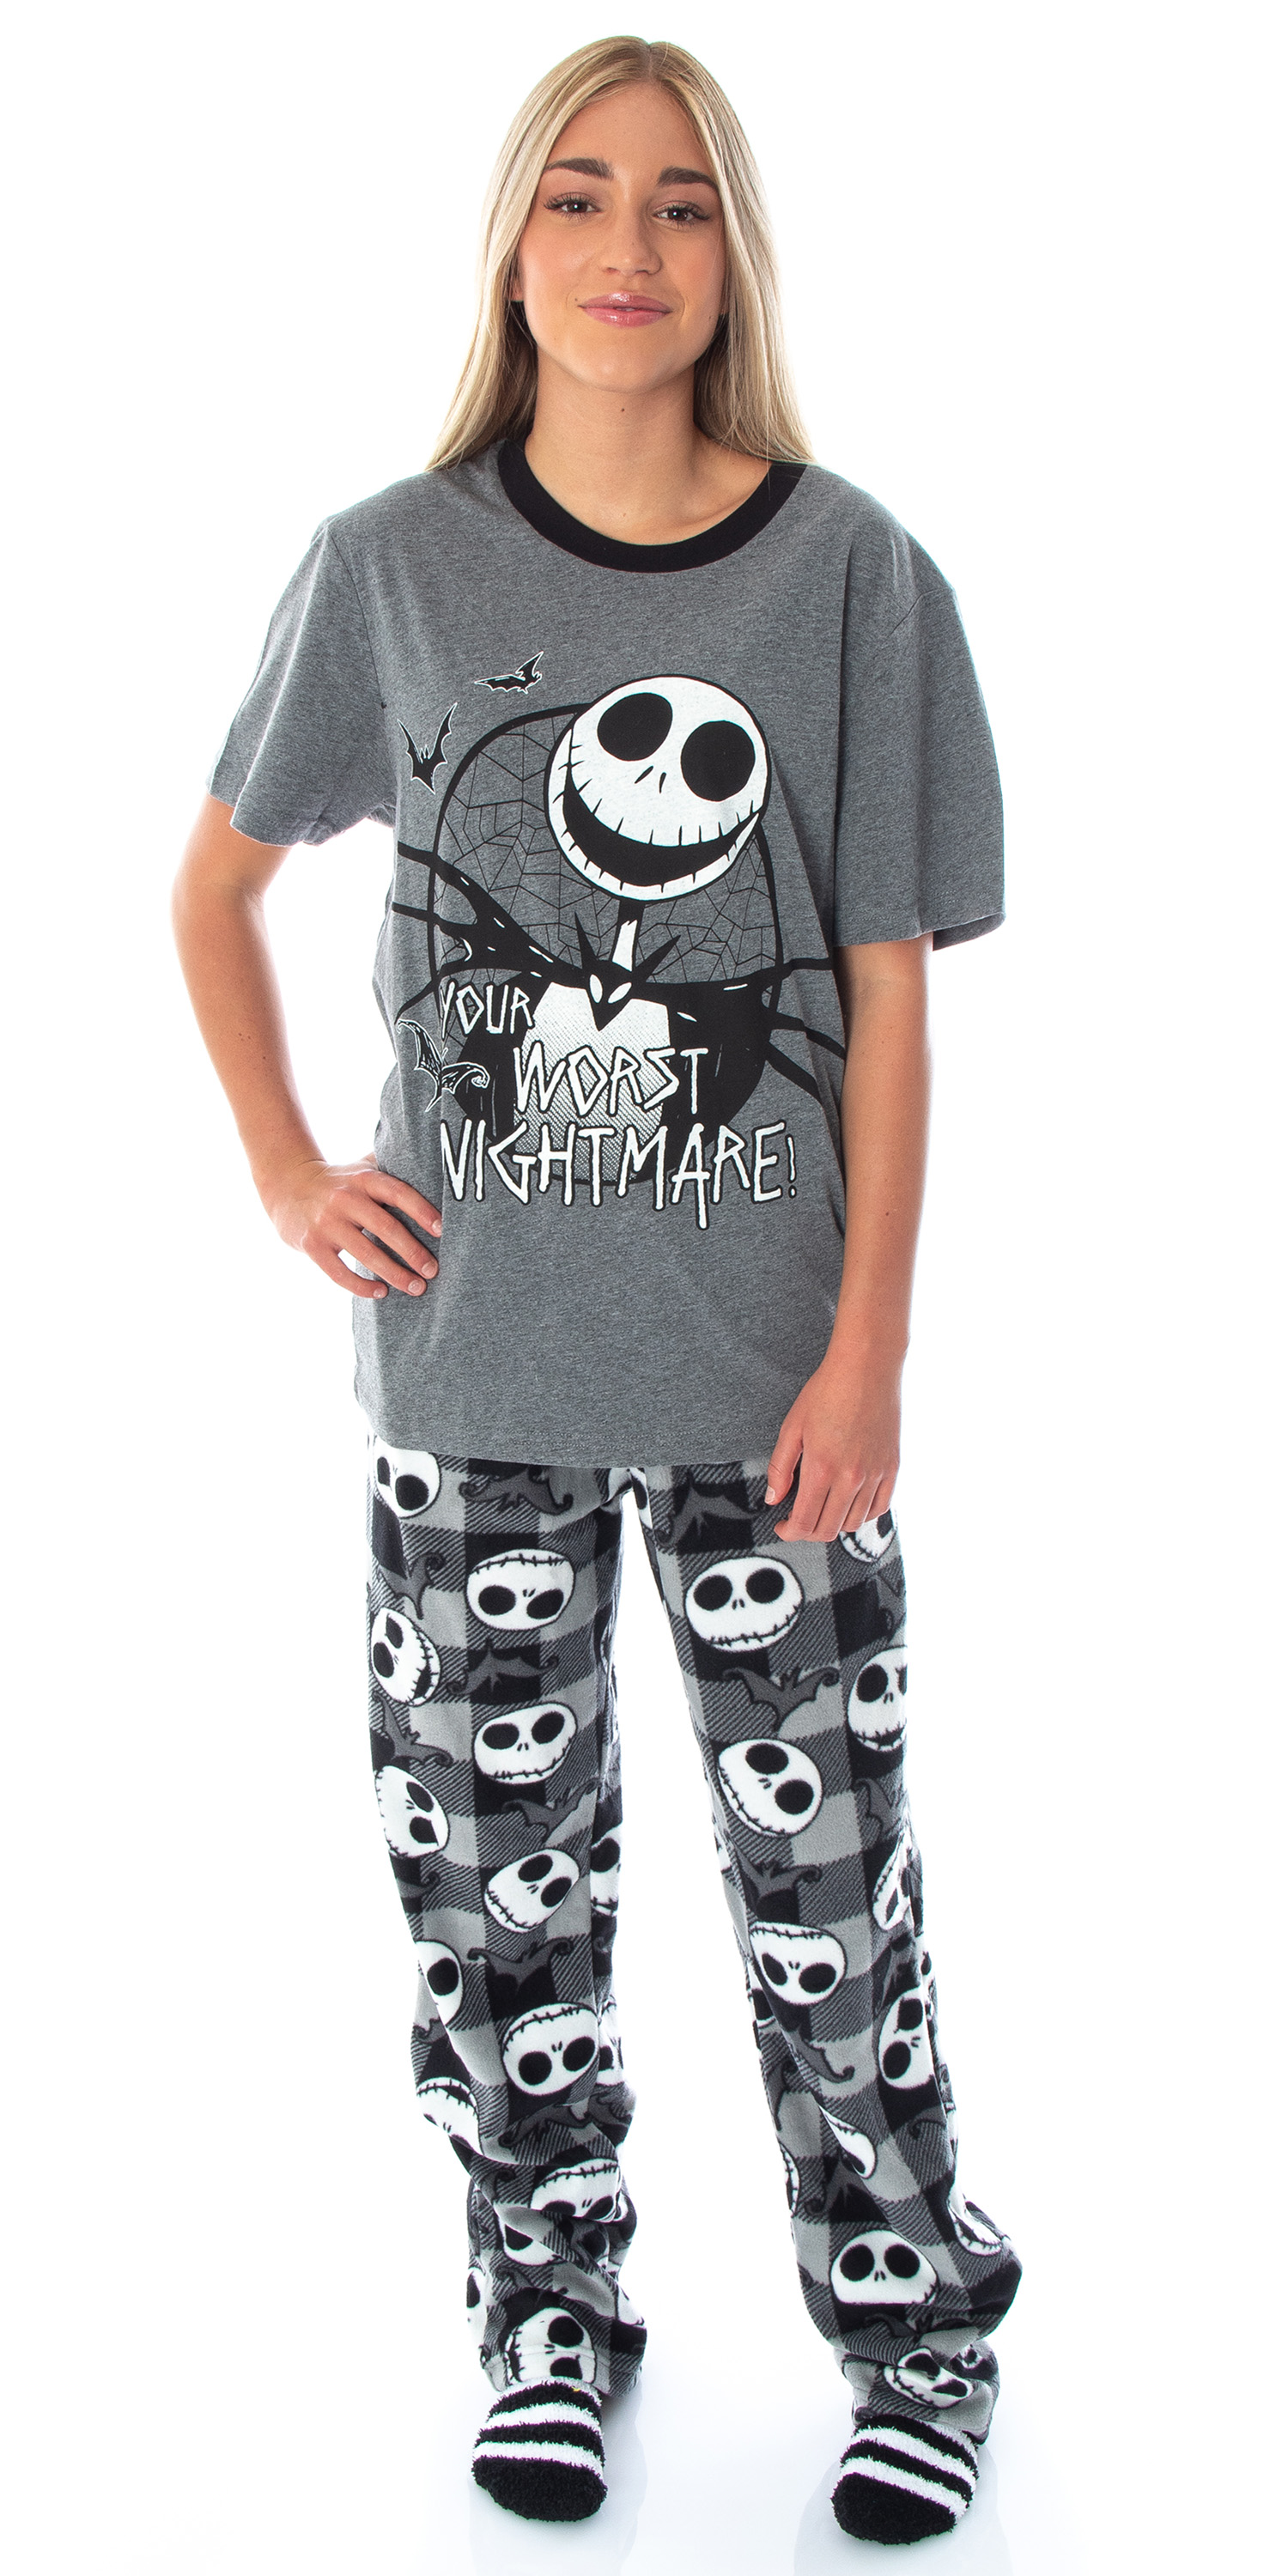 Seven Times Six Nightmare Before Christmas Jack Skellington 3 Piece Gift Set Pajama Pants, Shirt, and Cozy Socks